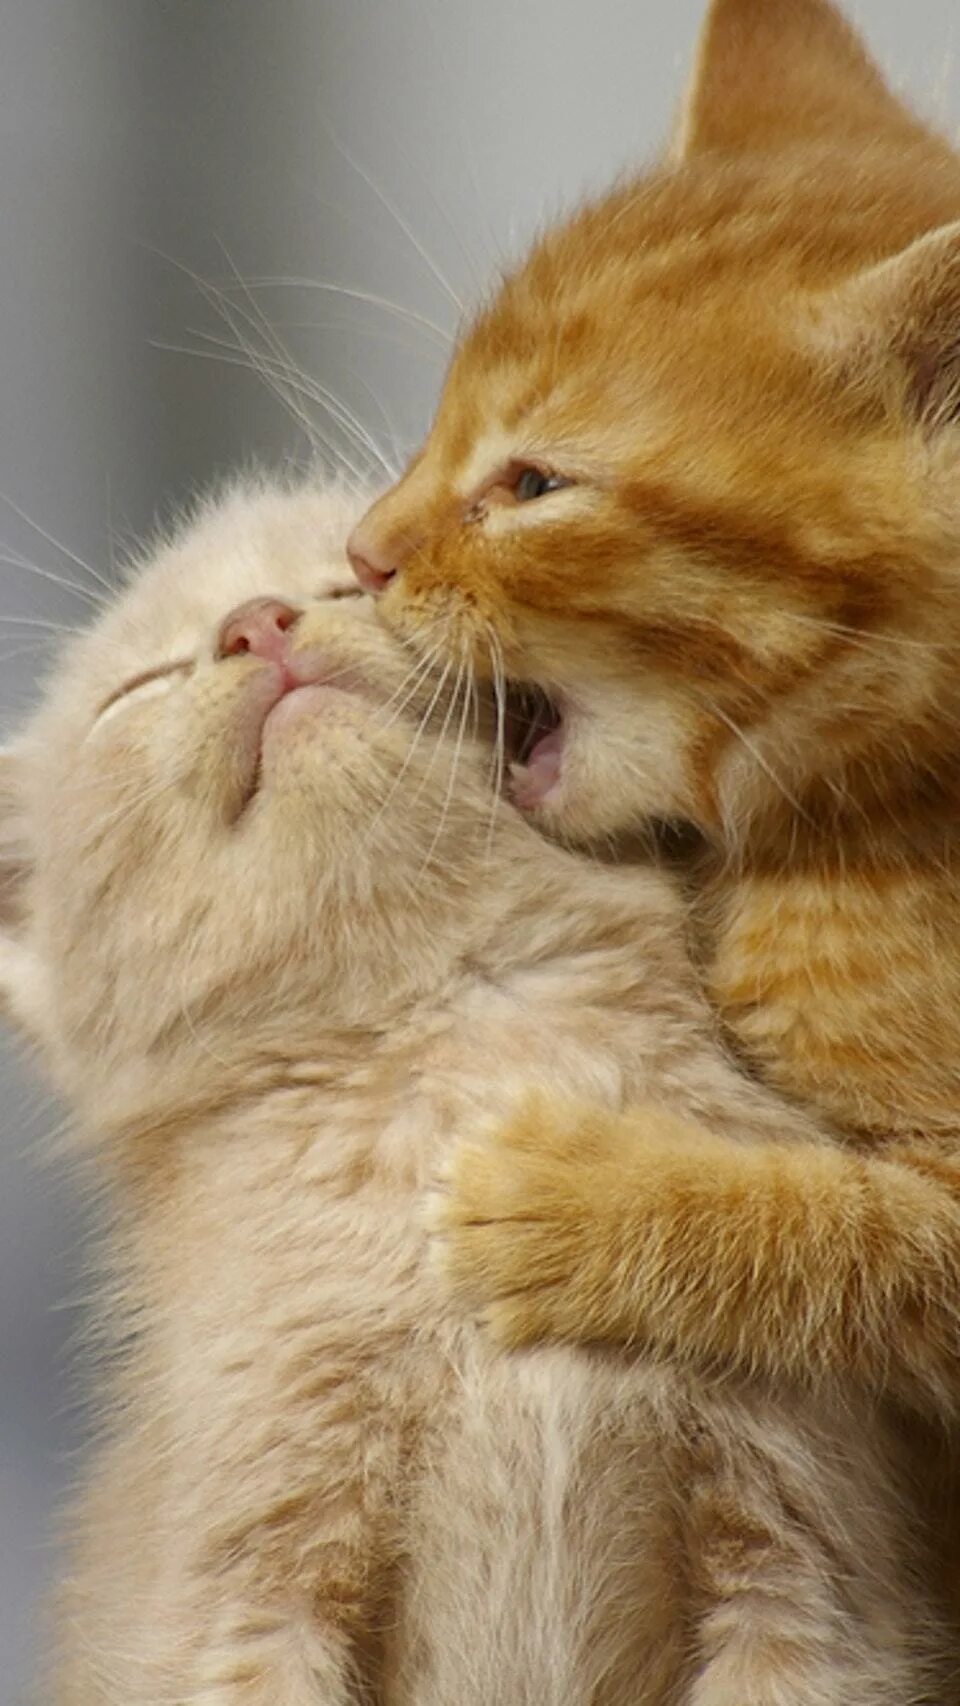 Песня дай я тебя поцеловала. Поцелуй. Котики целуются. Иди поцелую. Расцелую тебя.